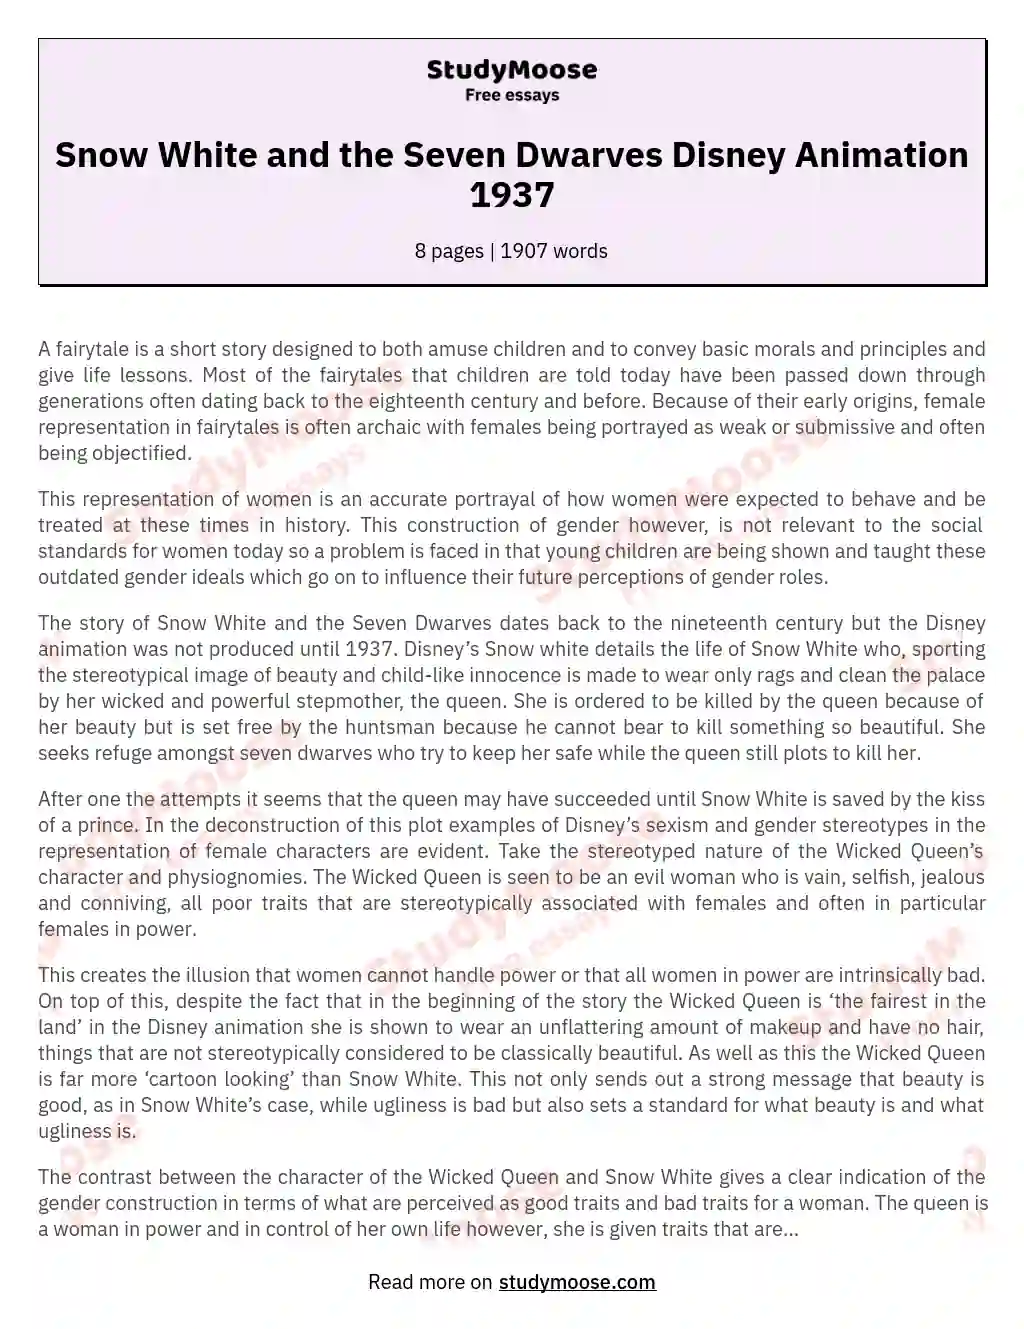 snow white story summary essay